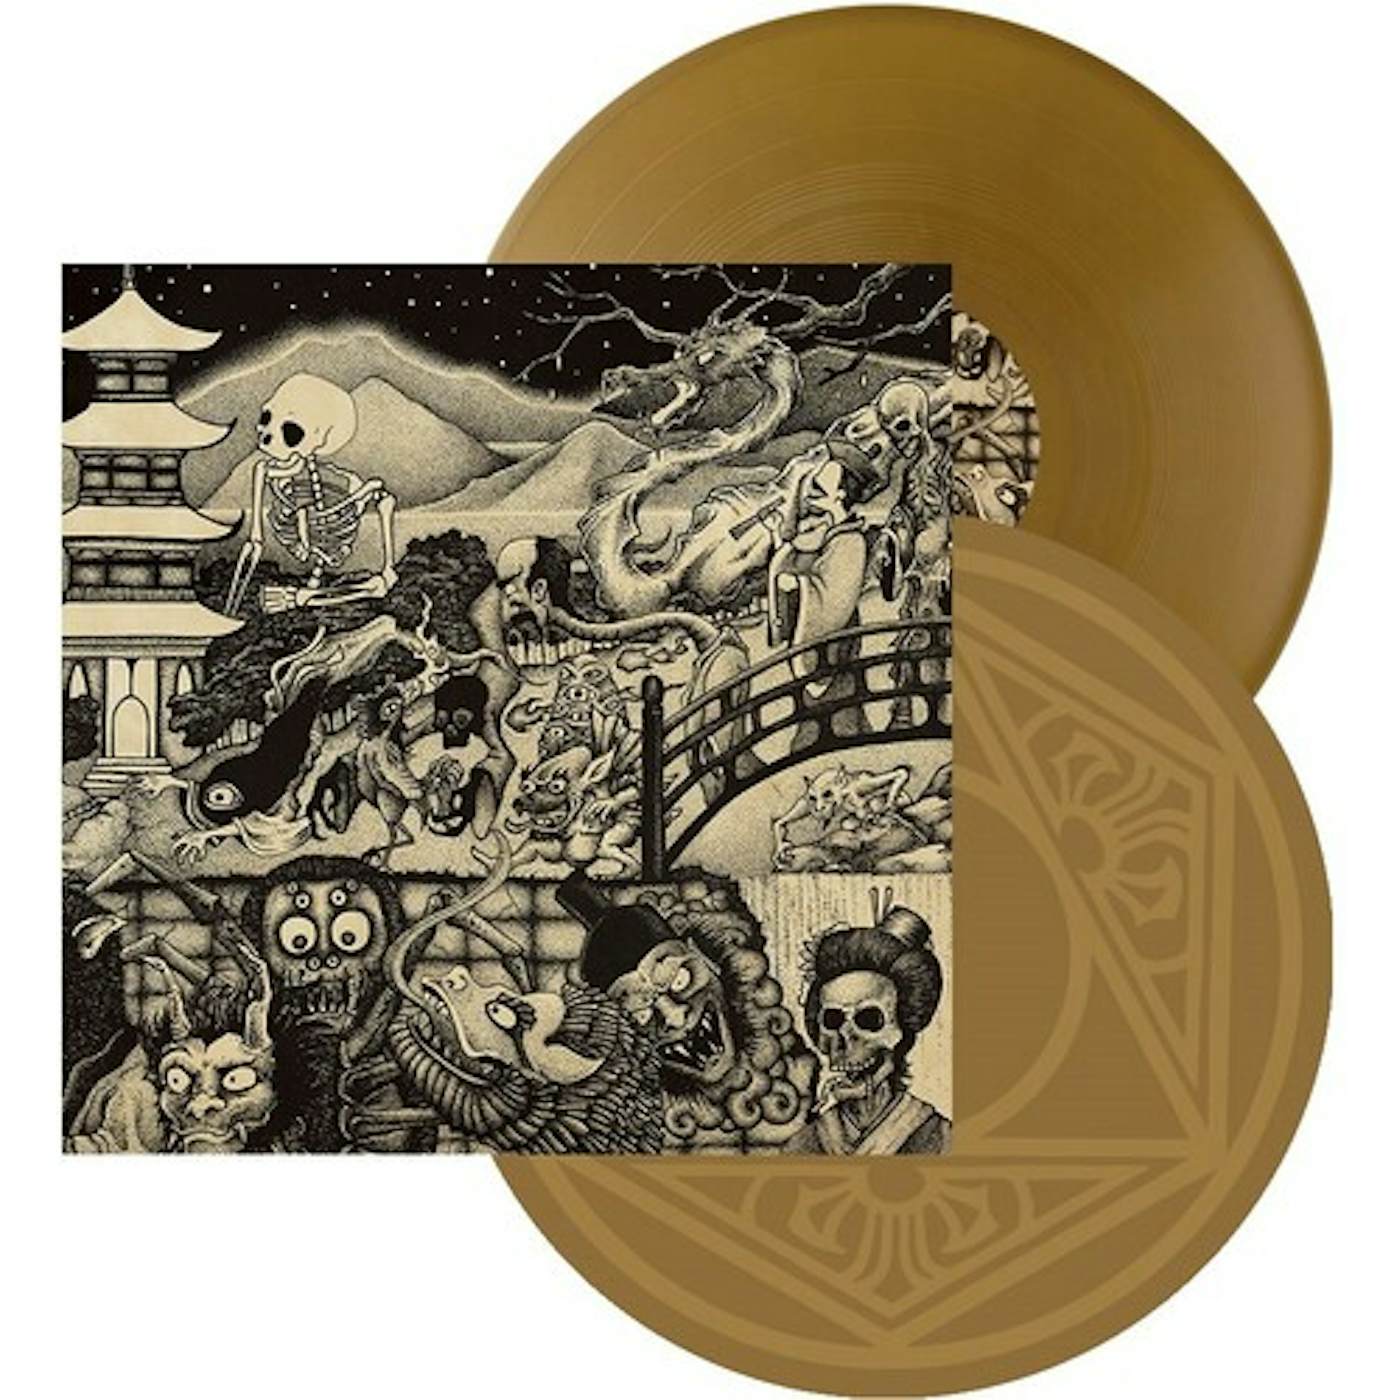 Earthless NIGHT PARADE OF ONE HUNDRED DEMONS (GOLD STANDARD Vinyl Record